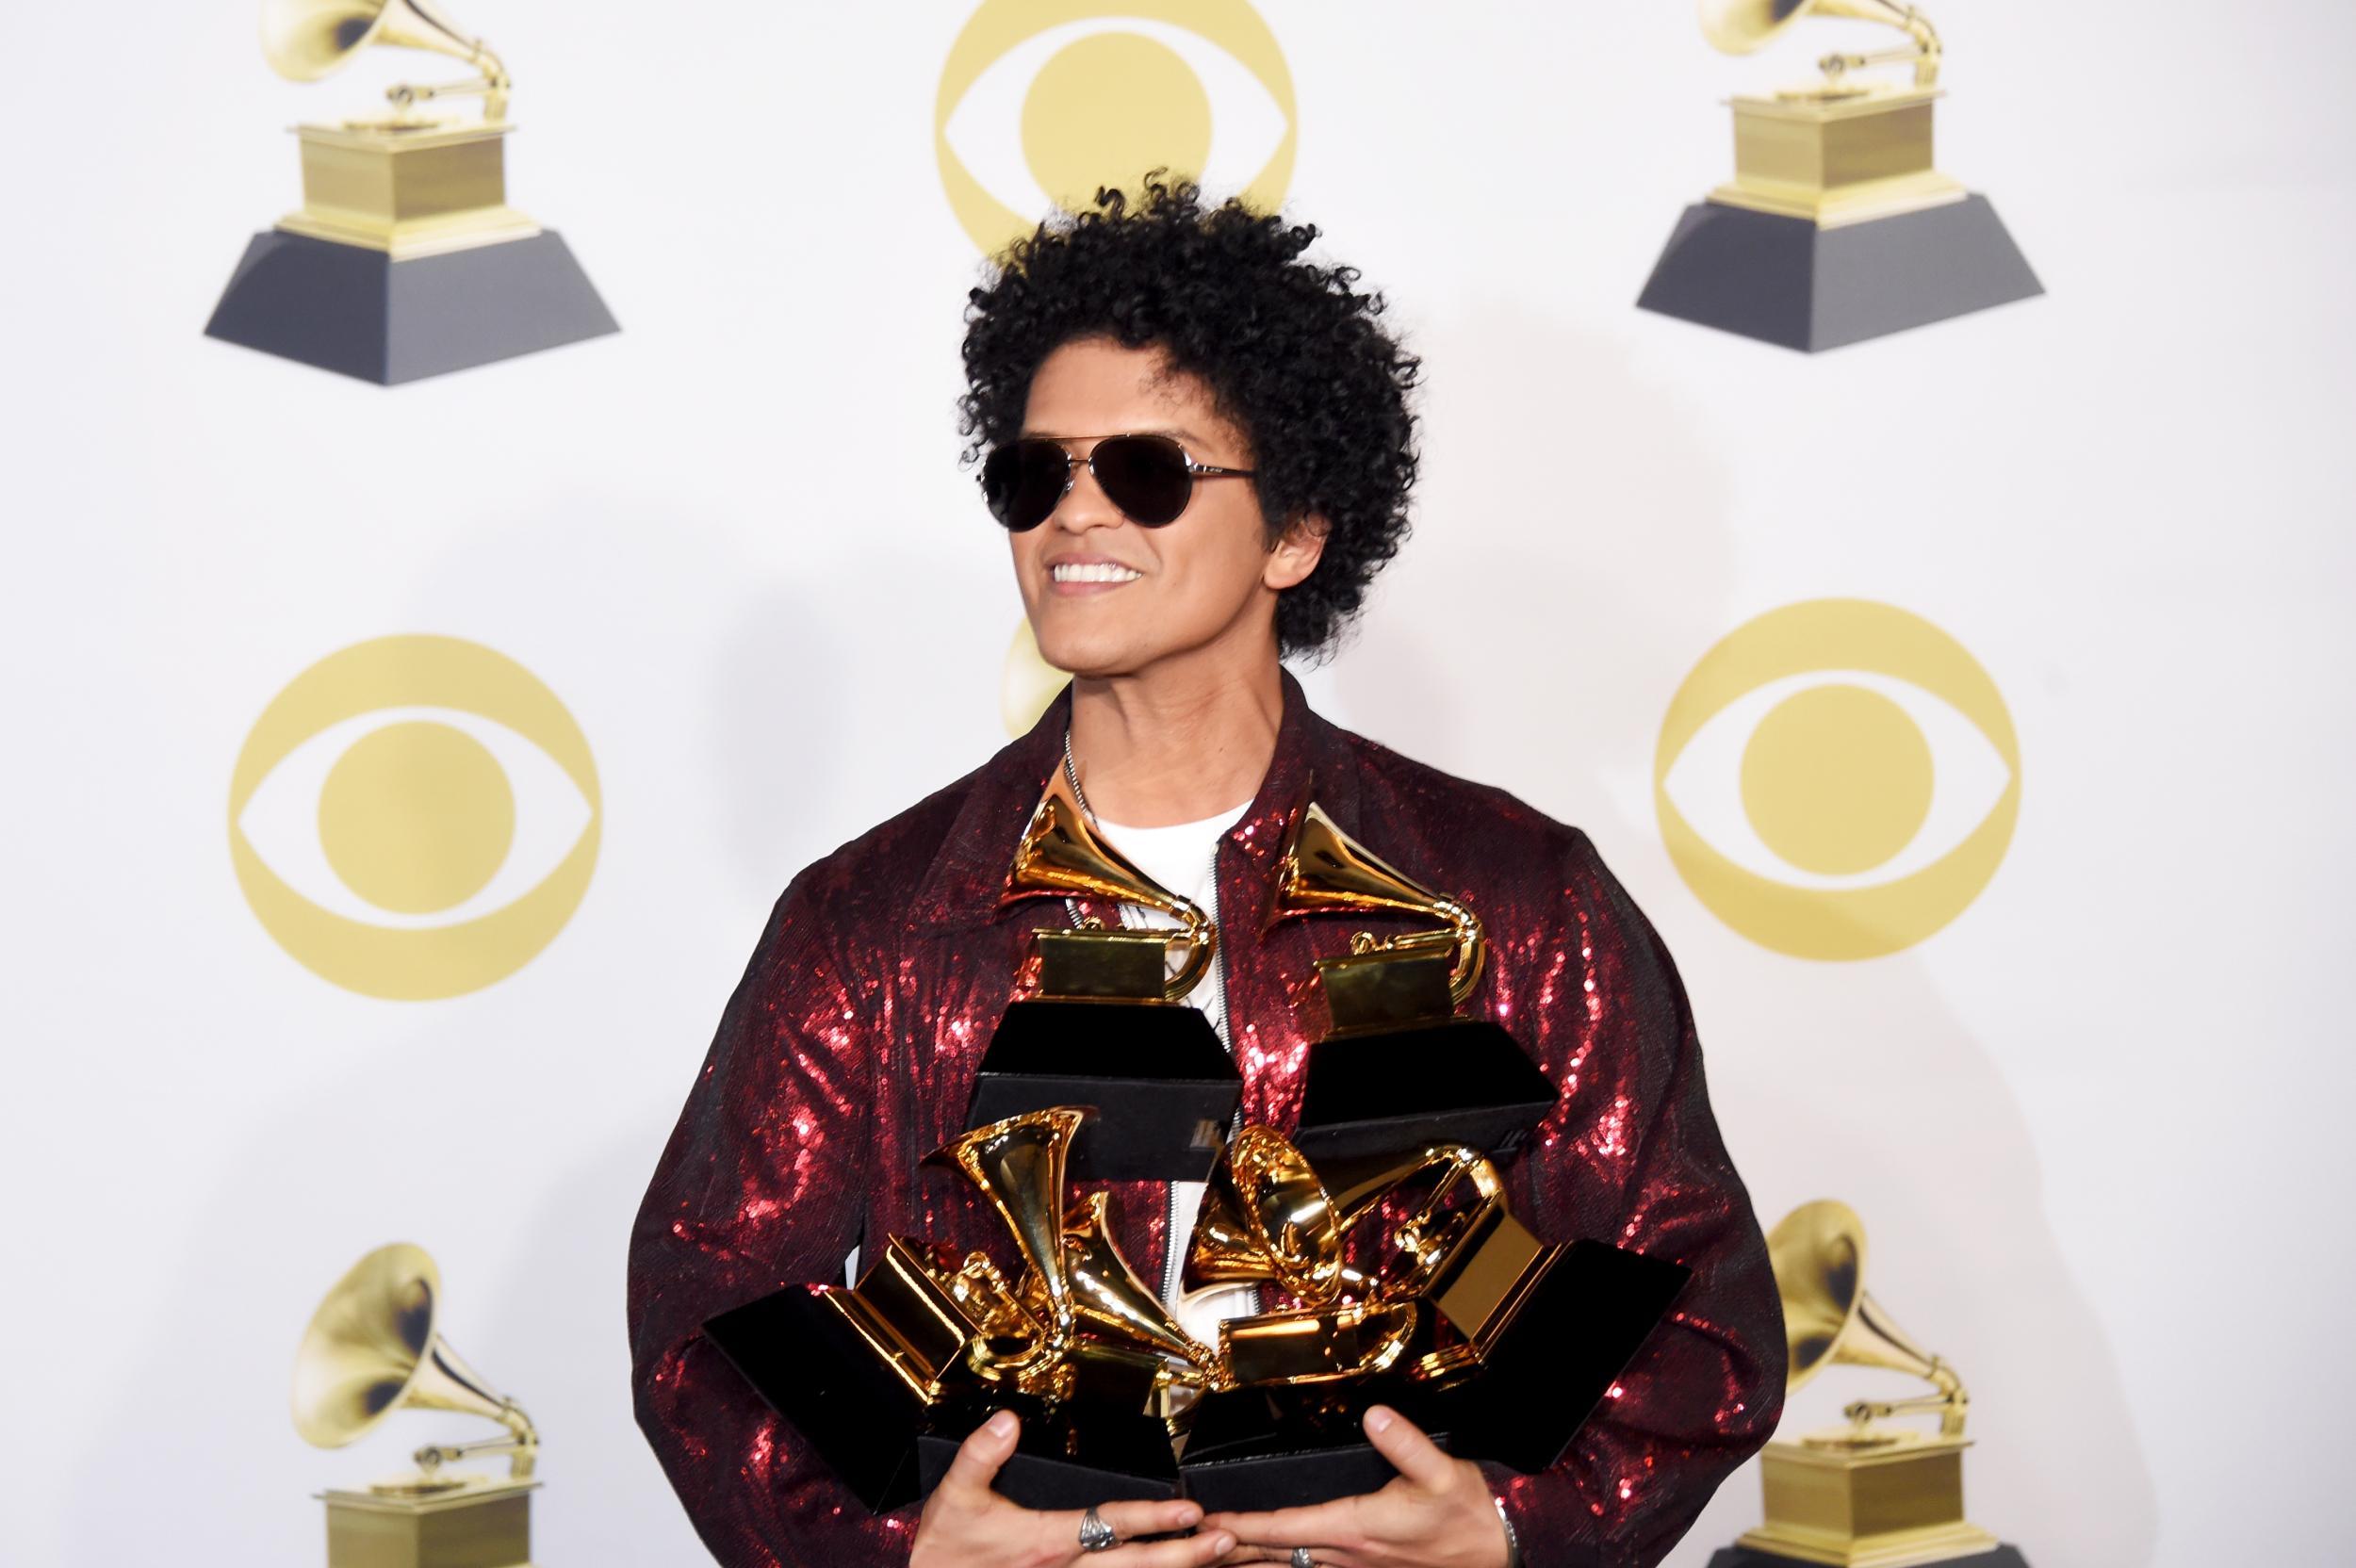 &#13;
Bruno Mars won six awards at the 60th annual Grammy Awards&#13;